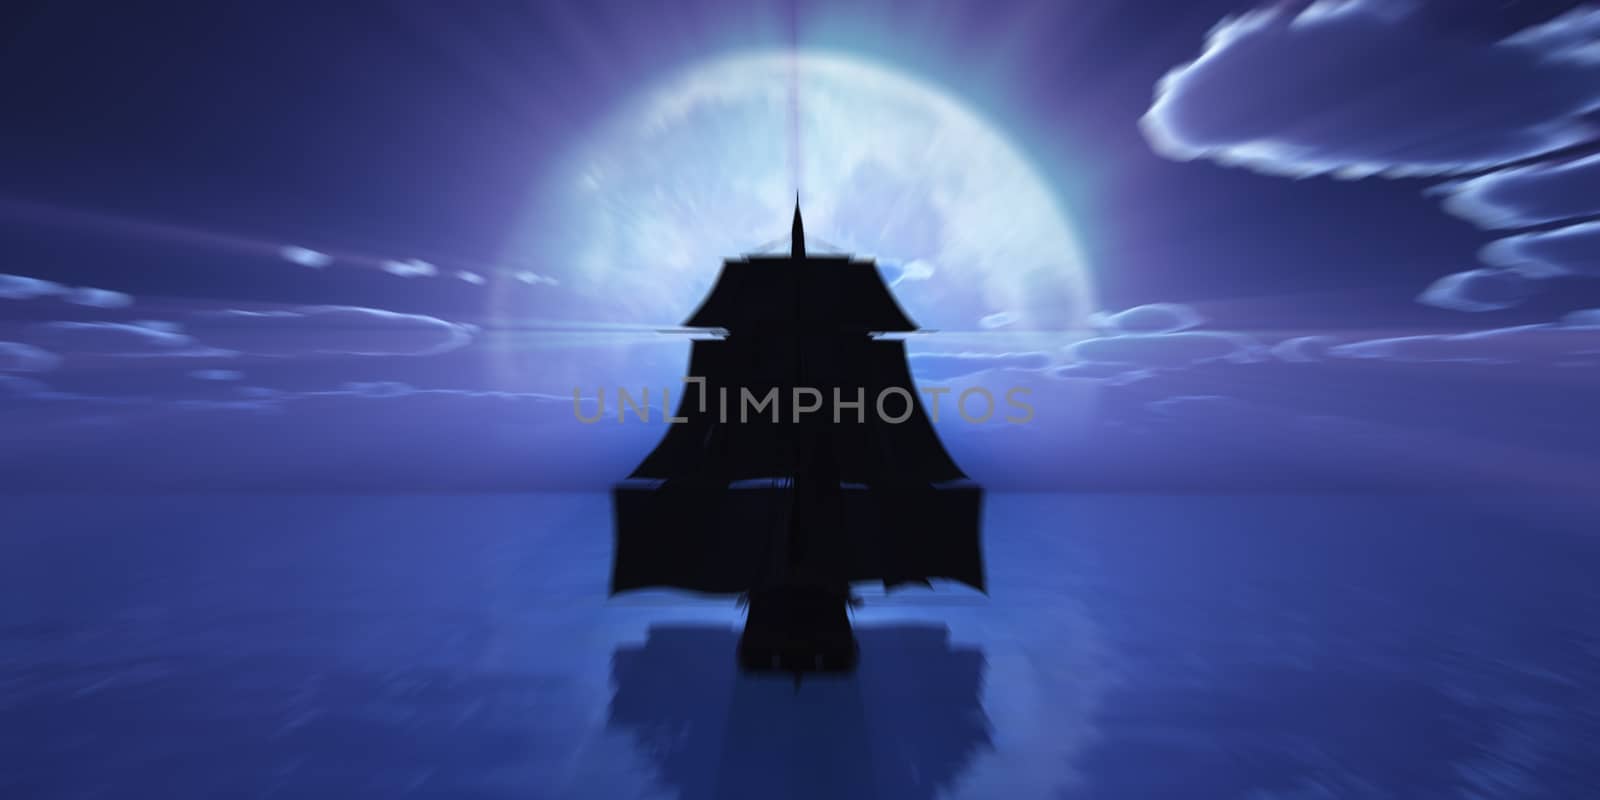 old ship at night full moon, 3d render